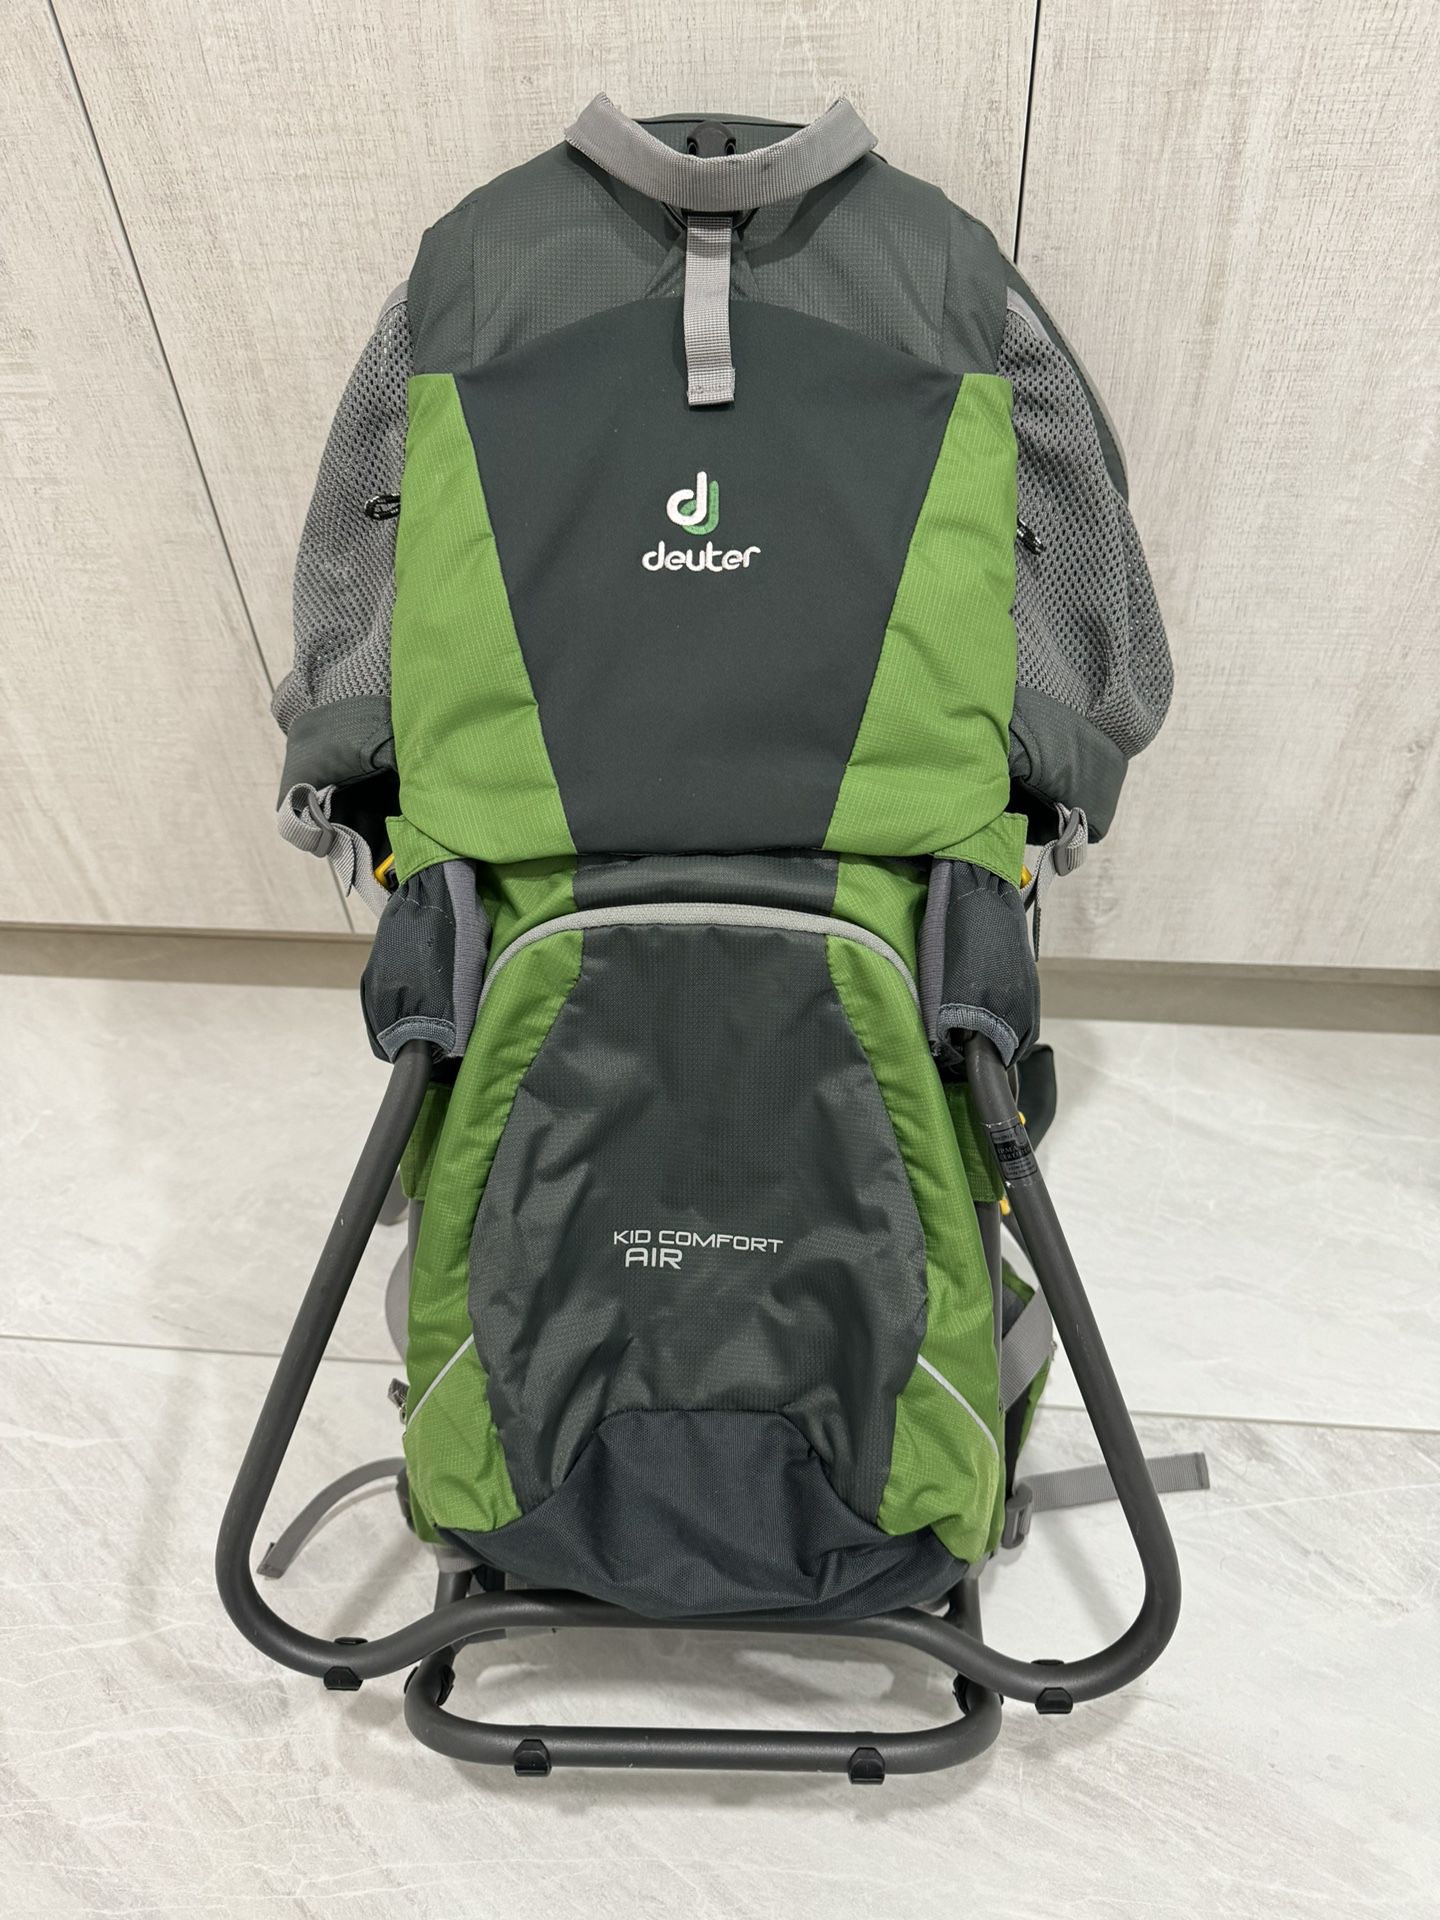 Deuter KID COMFORT AIR Baby Toddler Child Carrier Hiking Backpack 